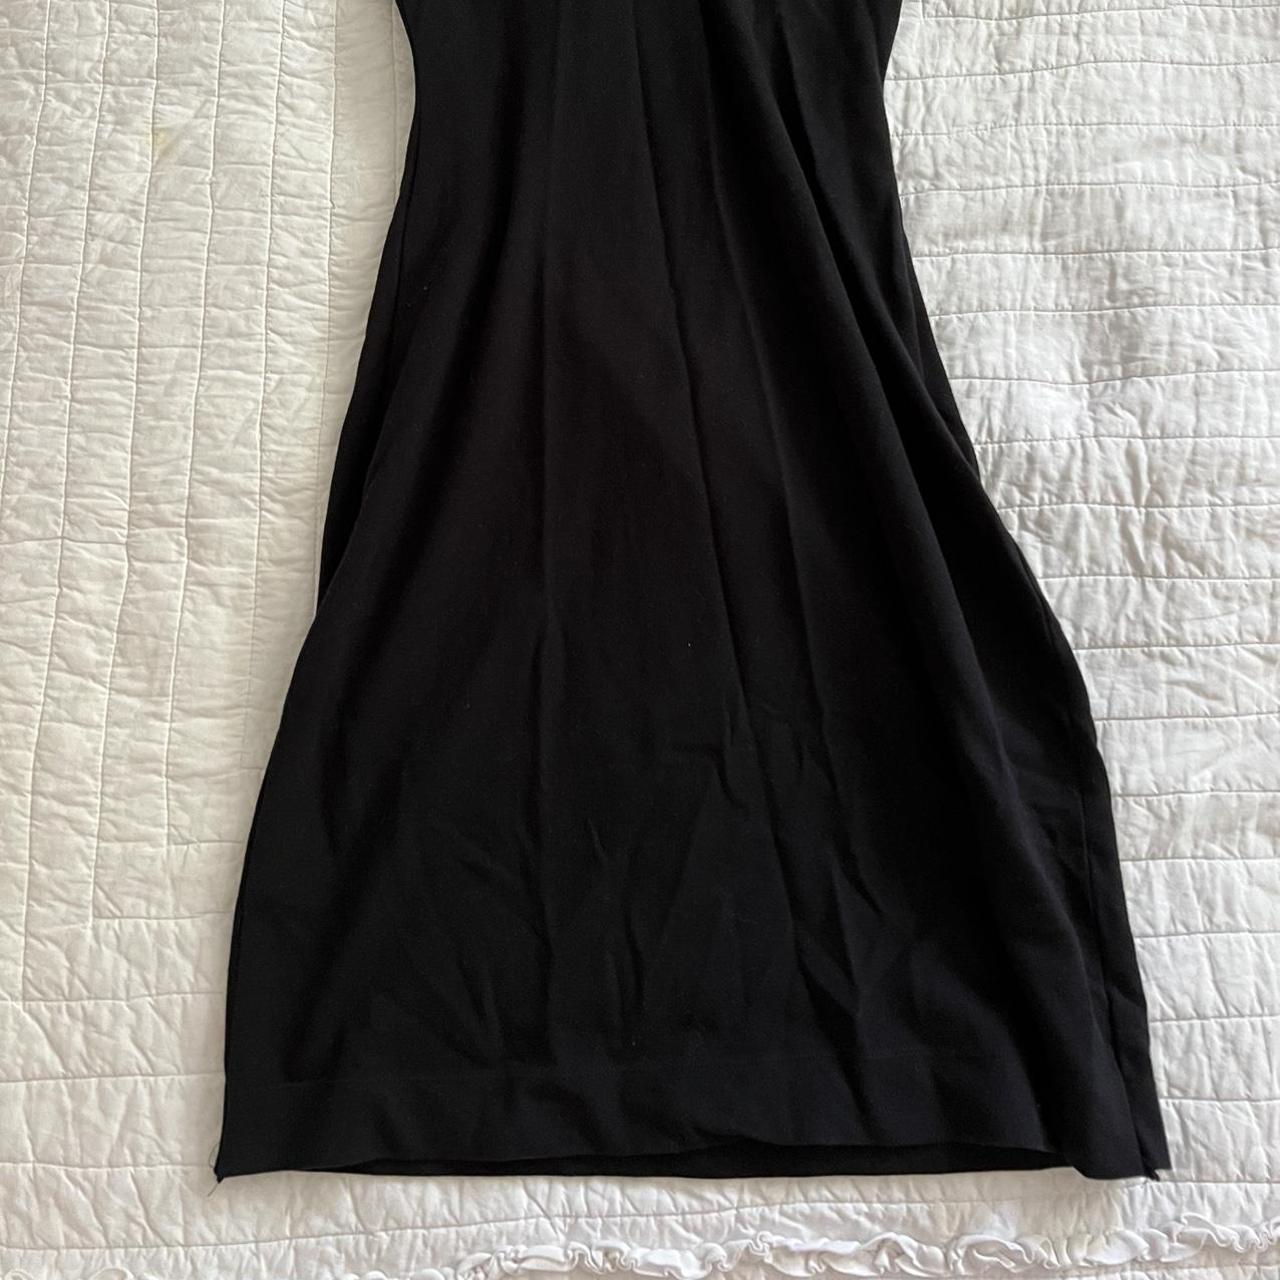 Talbots Women's Black Dress | Depop